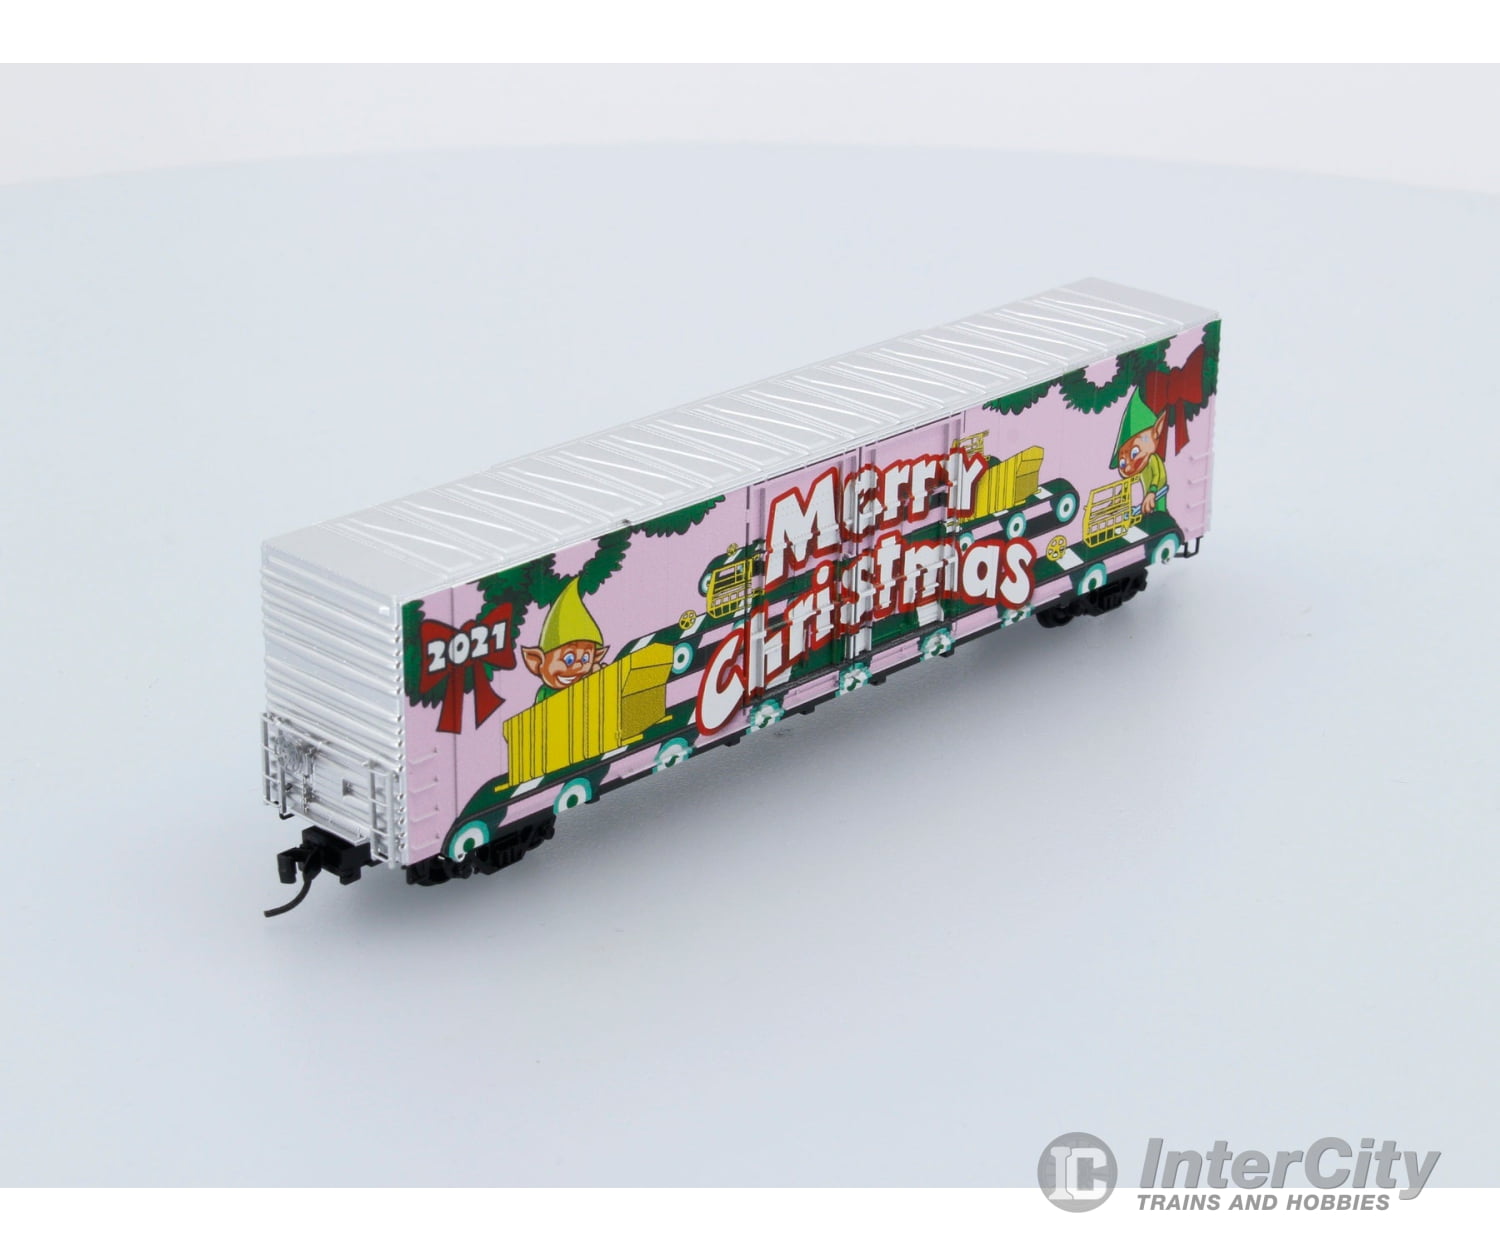 Micro Trains 102 00 160 Mouse Christmas 2021 Car 60’ Box Double Plug Doors Freight Cars